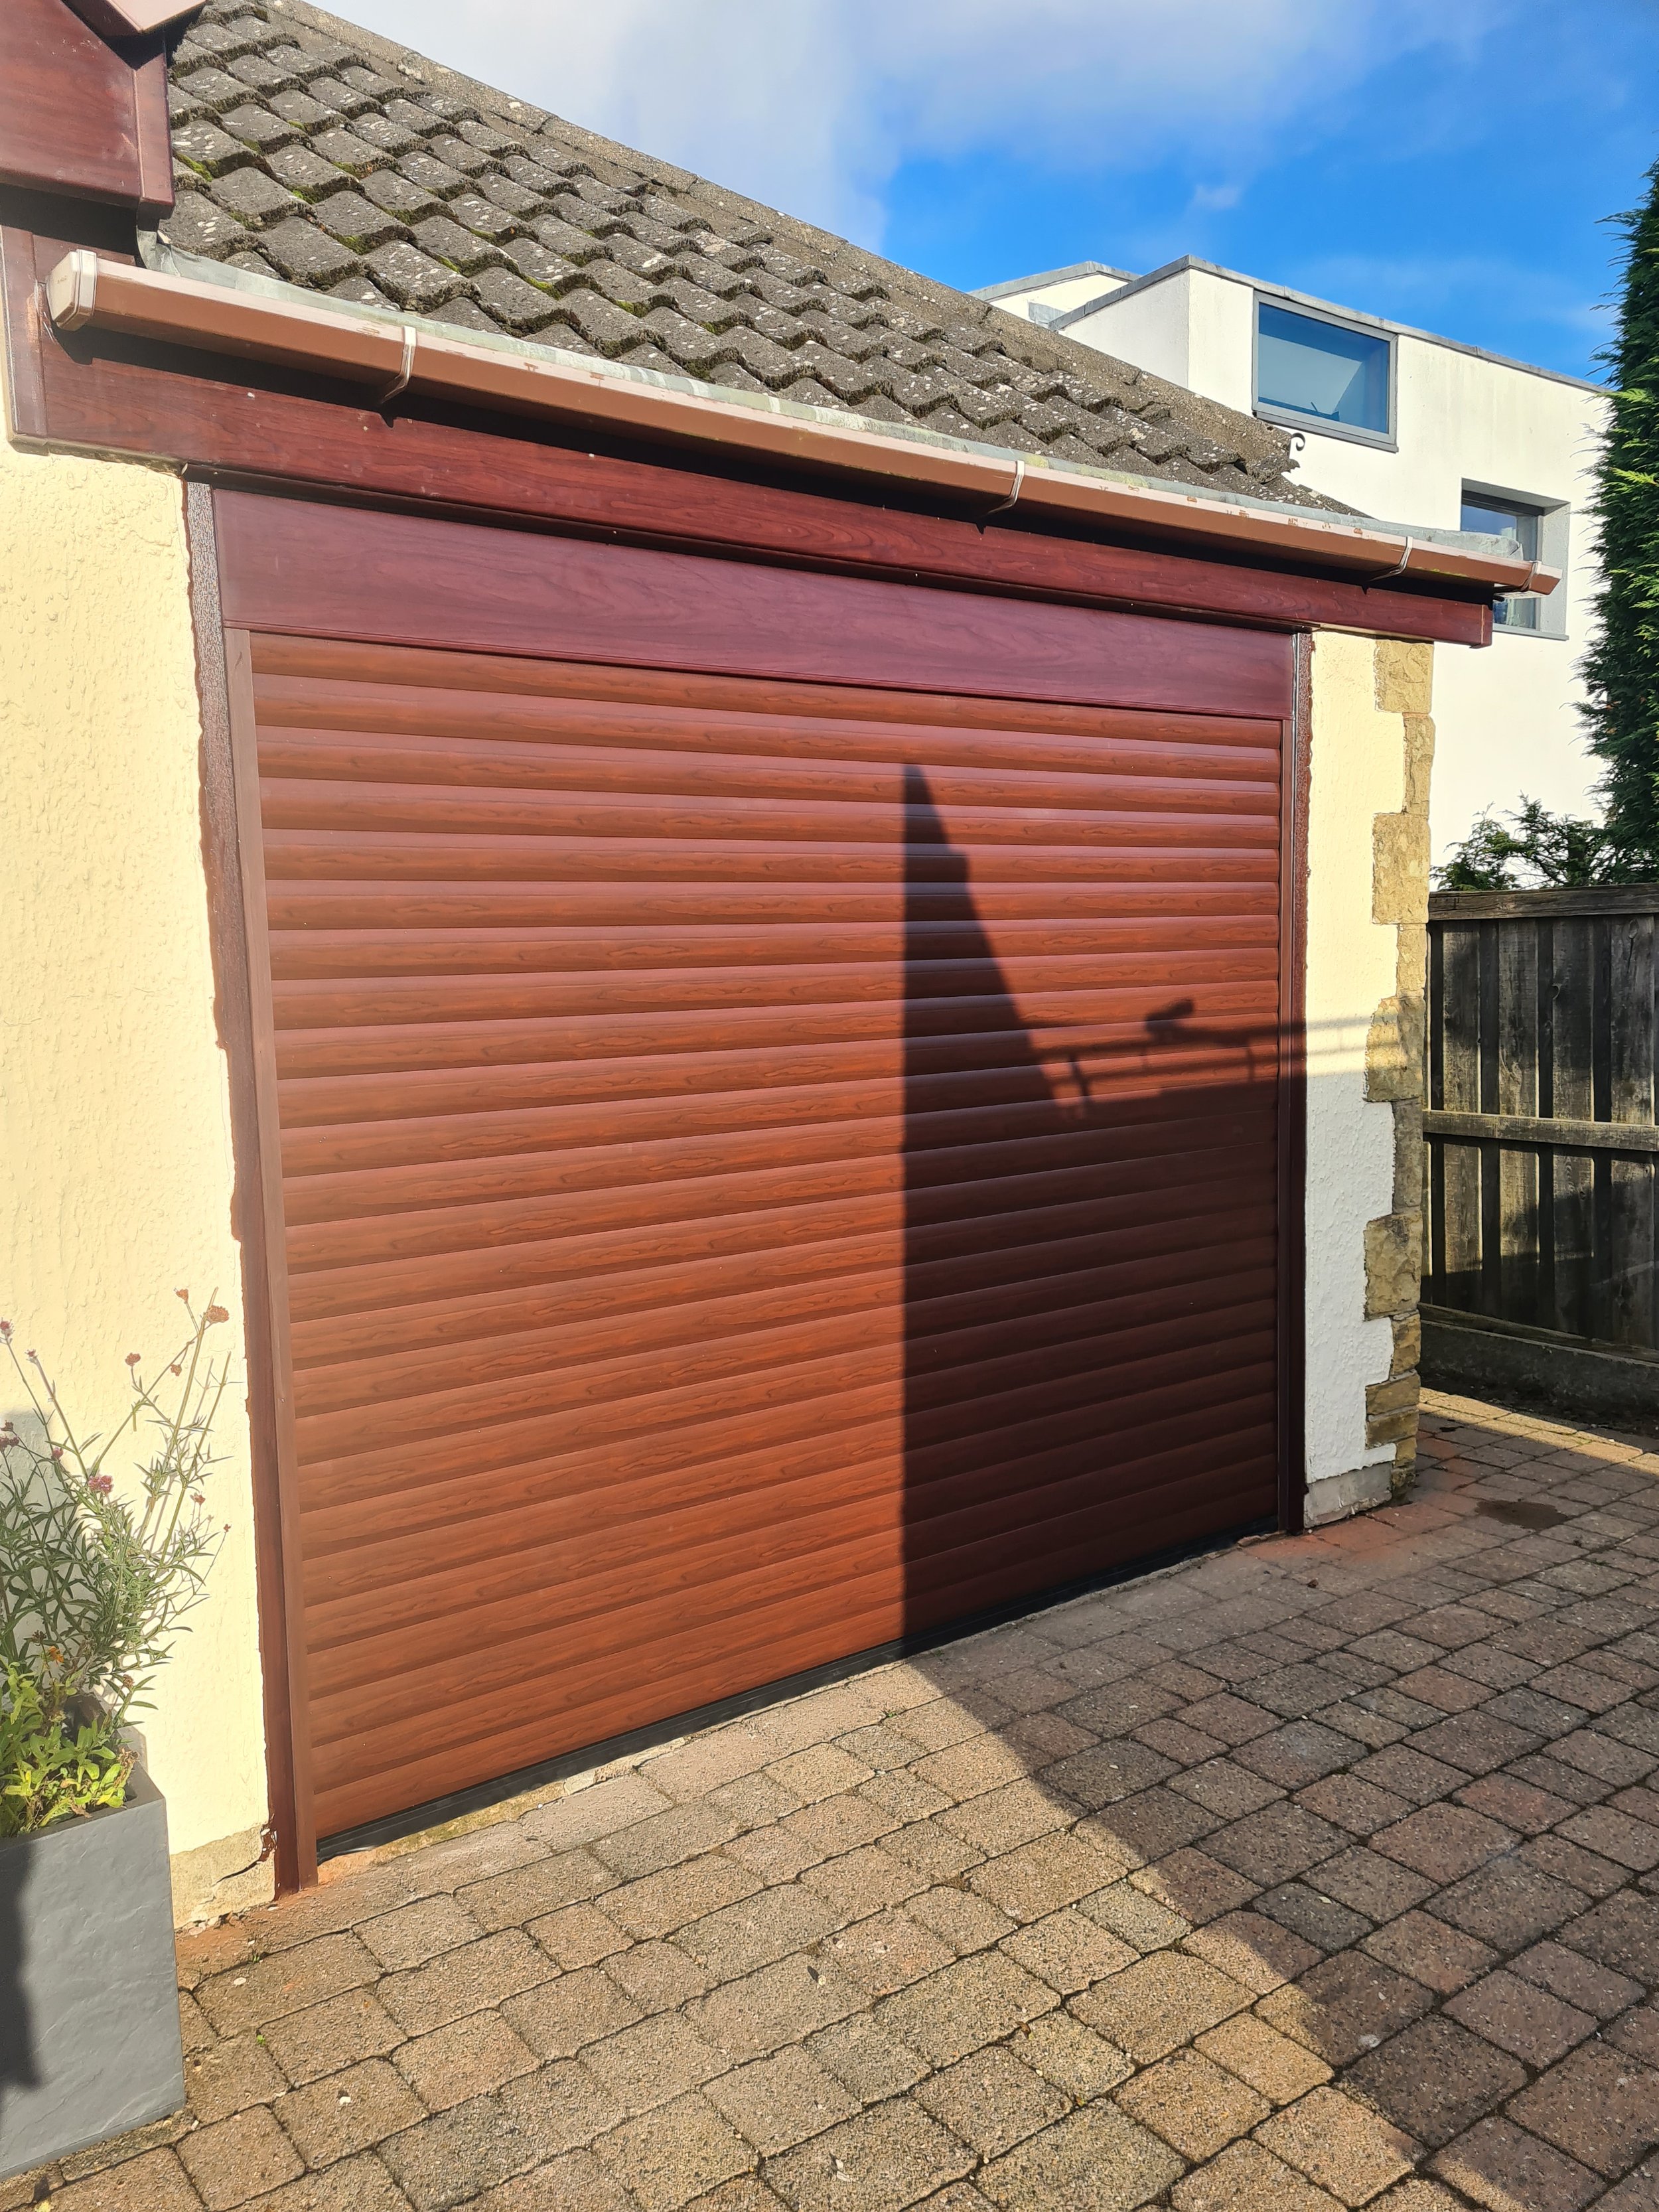 Uk Doors Midlands Classic 77m fully insulated roller garage door in Textured Rosewood W/ matching frame